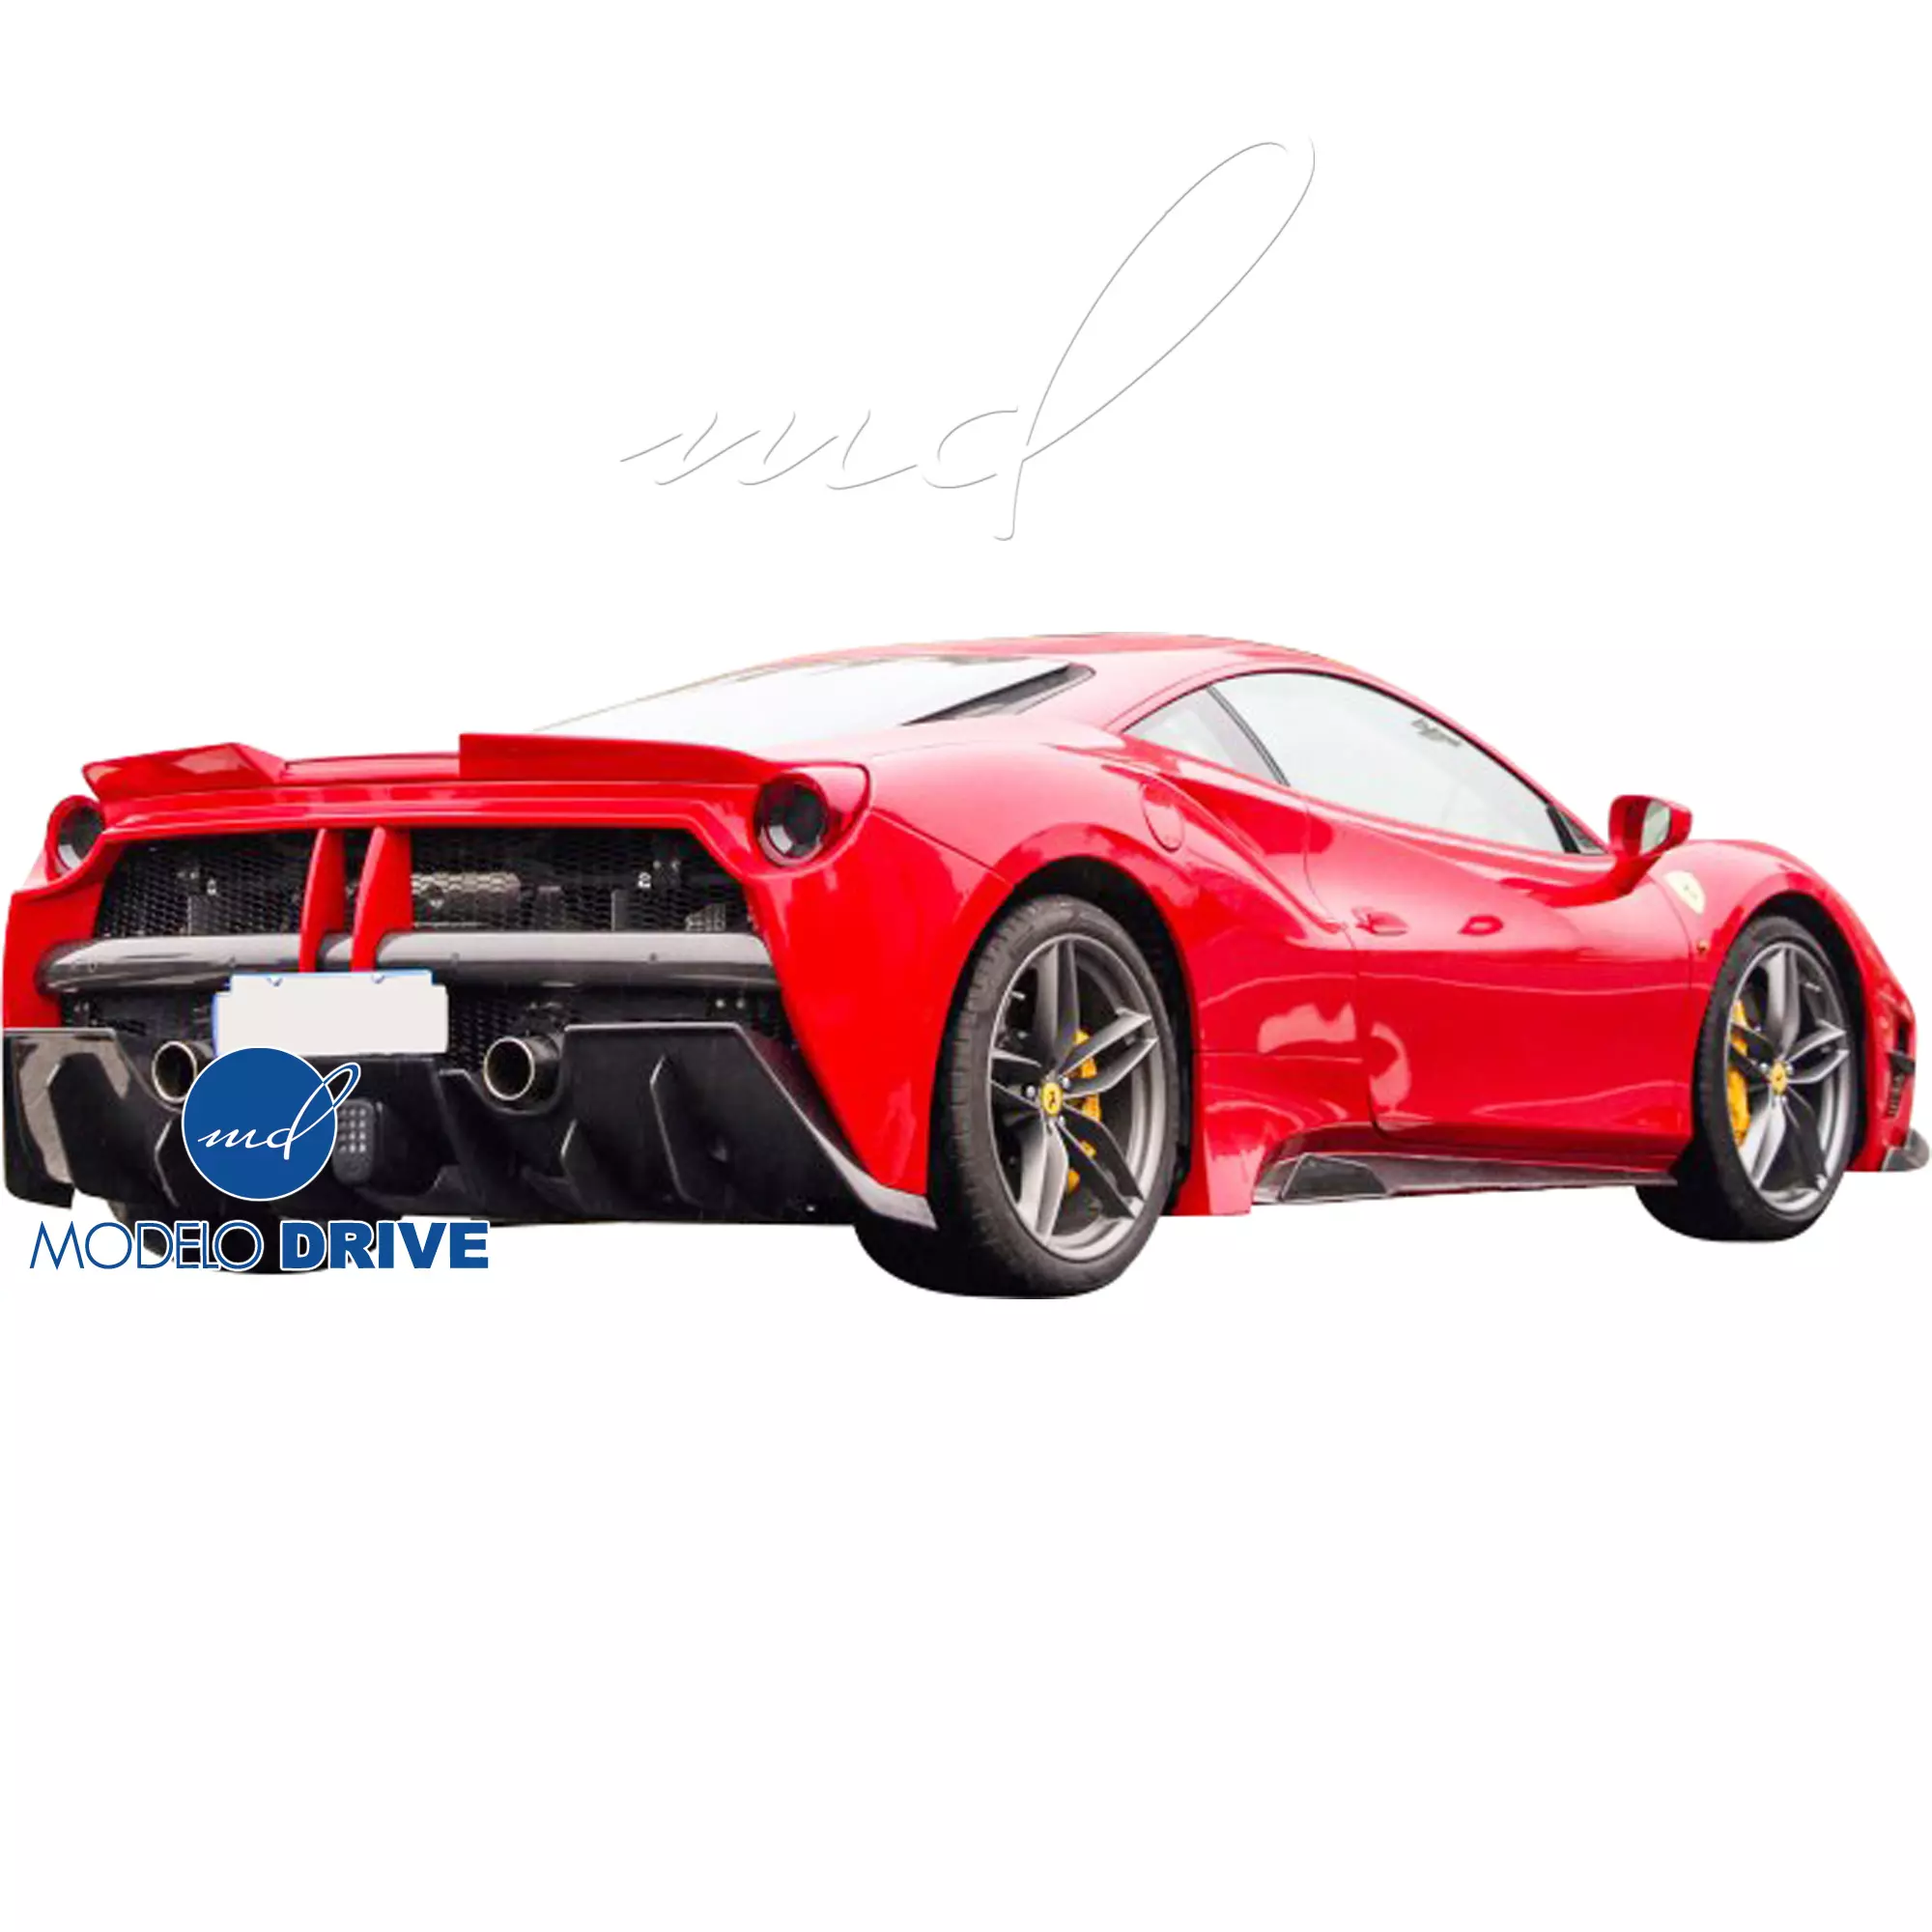 ModeloDrive Partial Carbon Fiber MDES Body Kit > Ferrari 488 GTB F142M 2016-2019 - Image 37